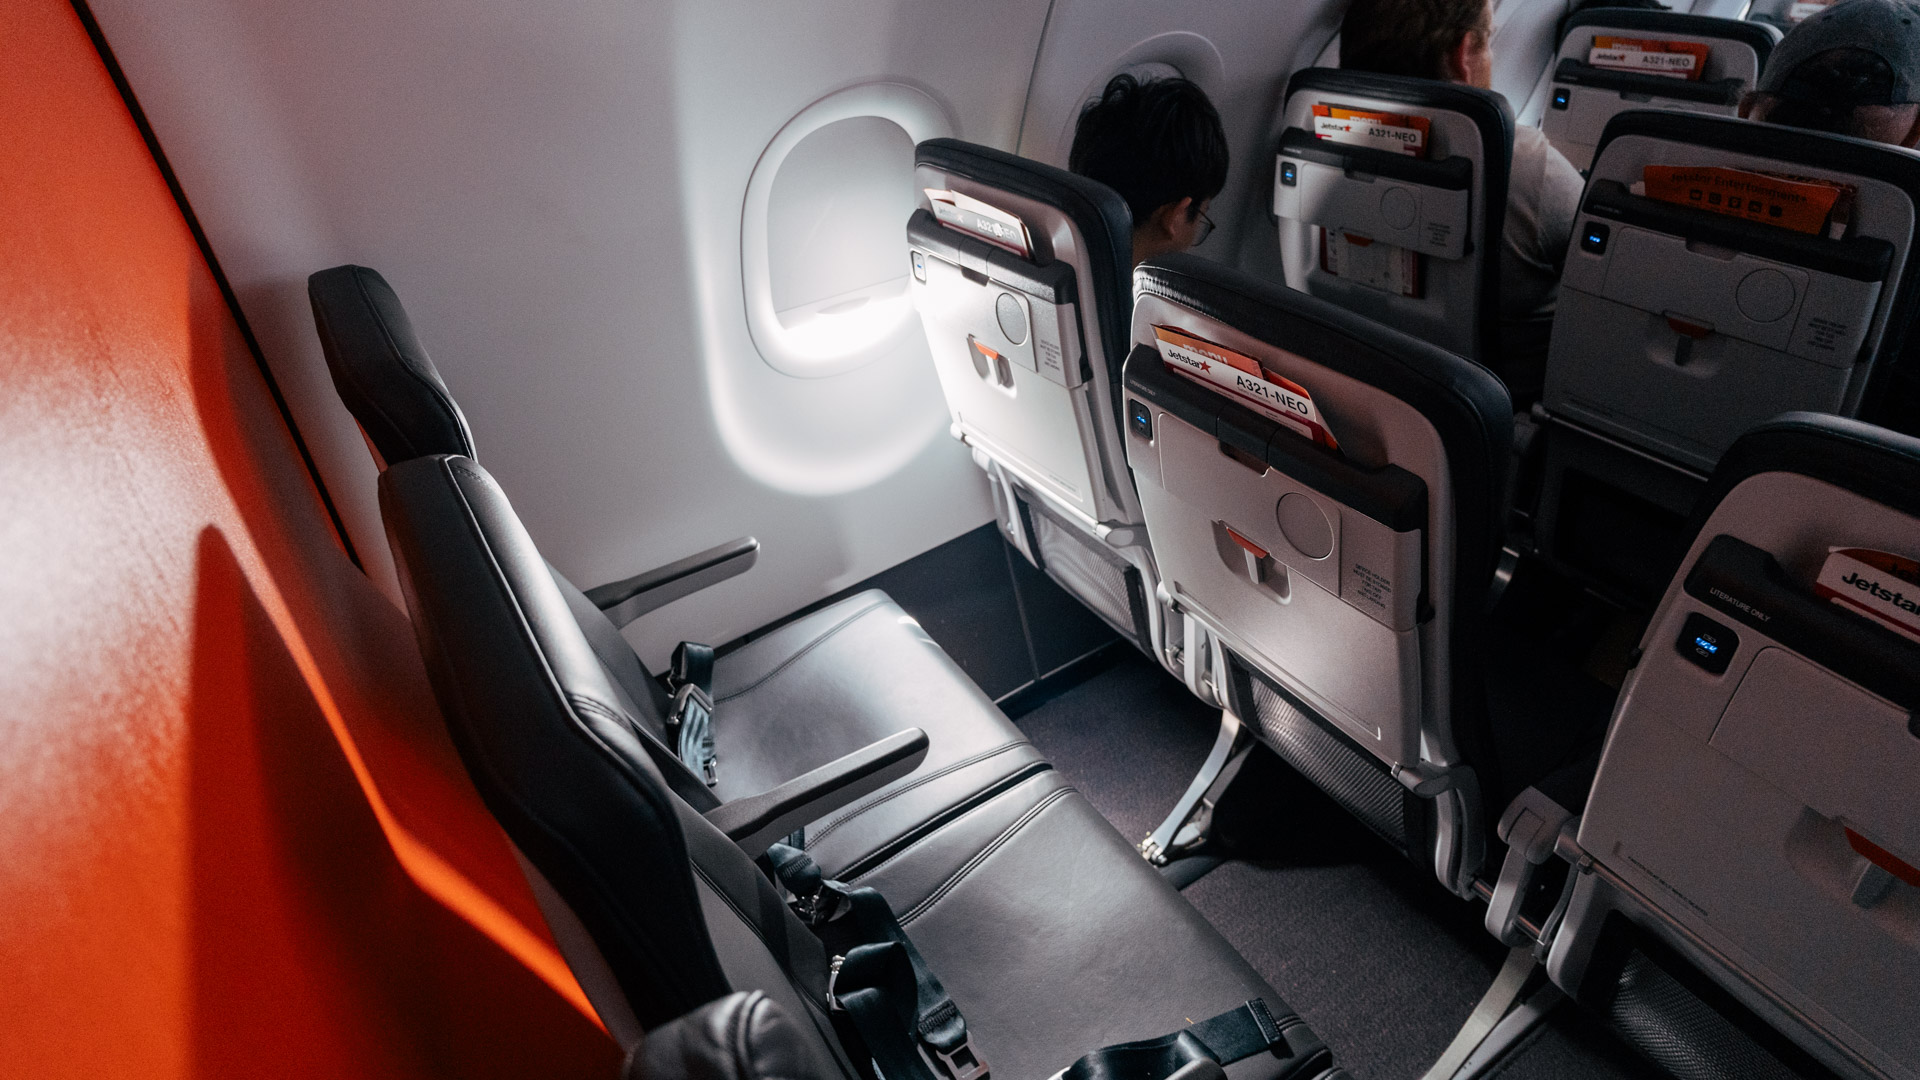 Jetstar Airbus A321neo standard seat